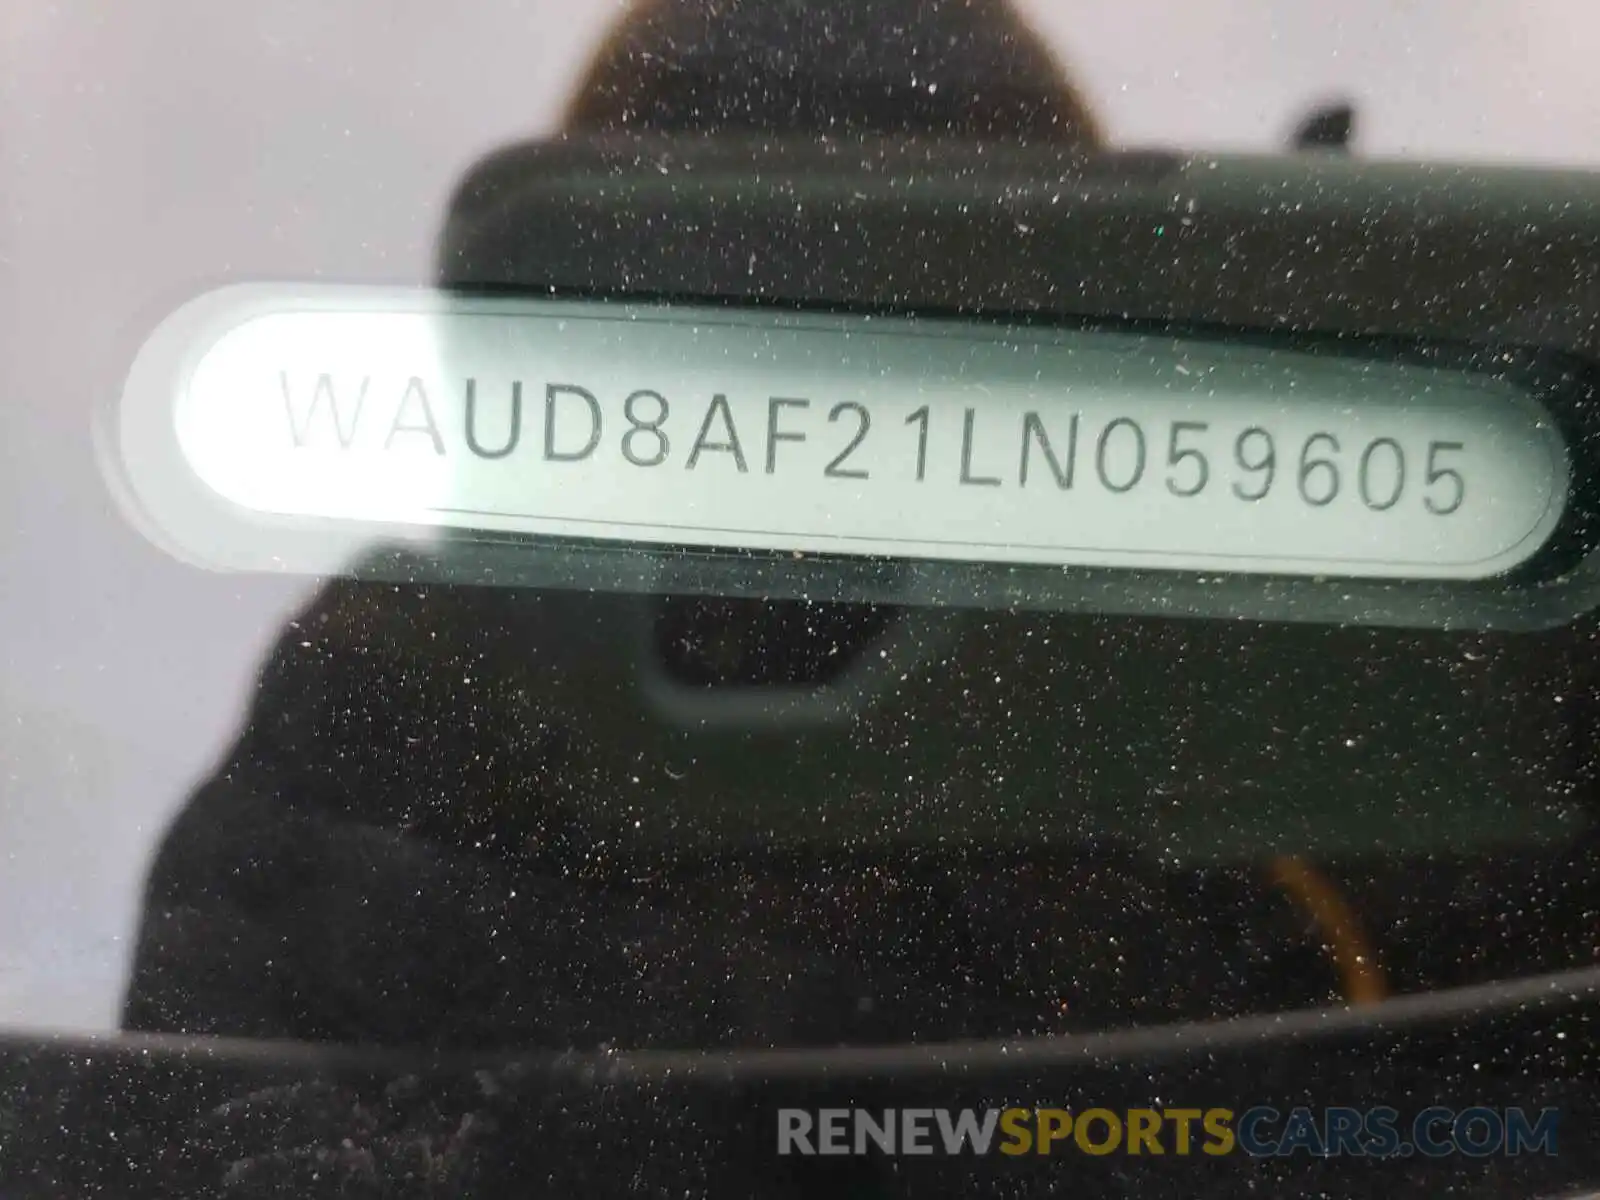 10 Photograph of a damaged car WAUD8AF21LN059605 AUDI A6 2020